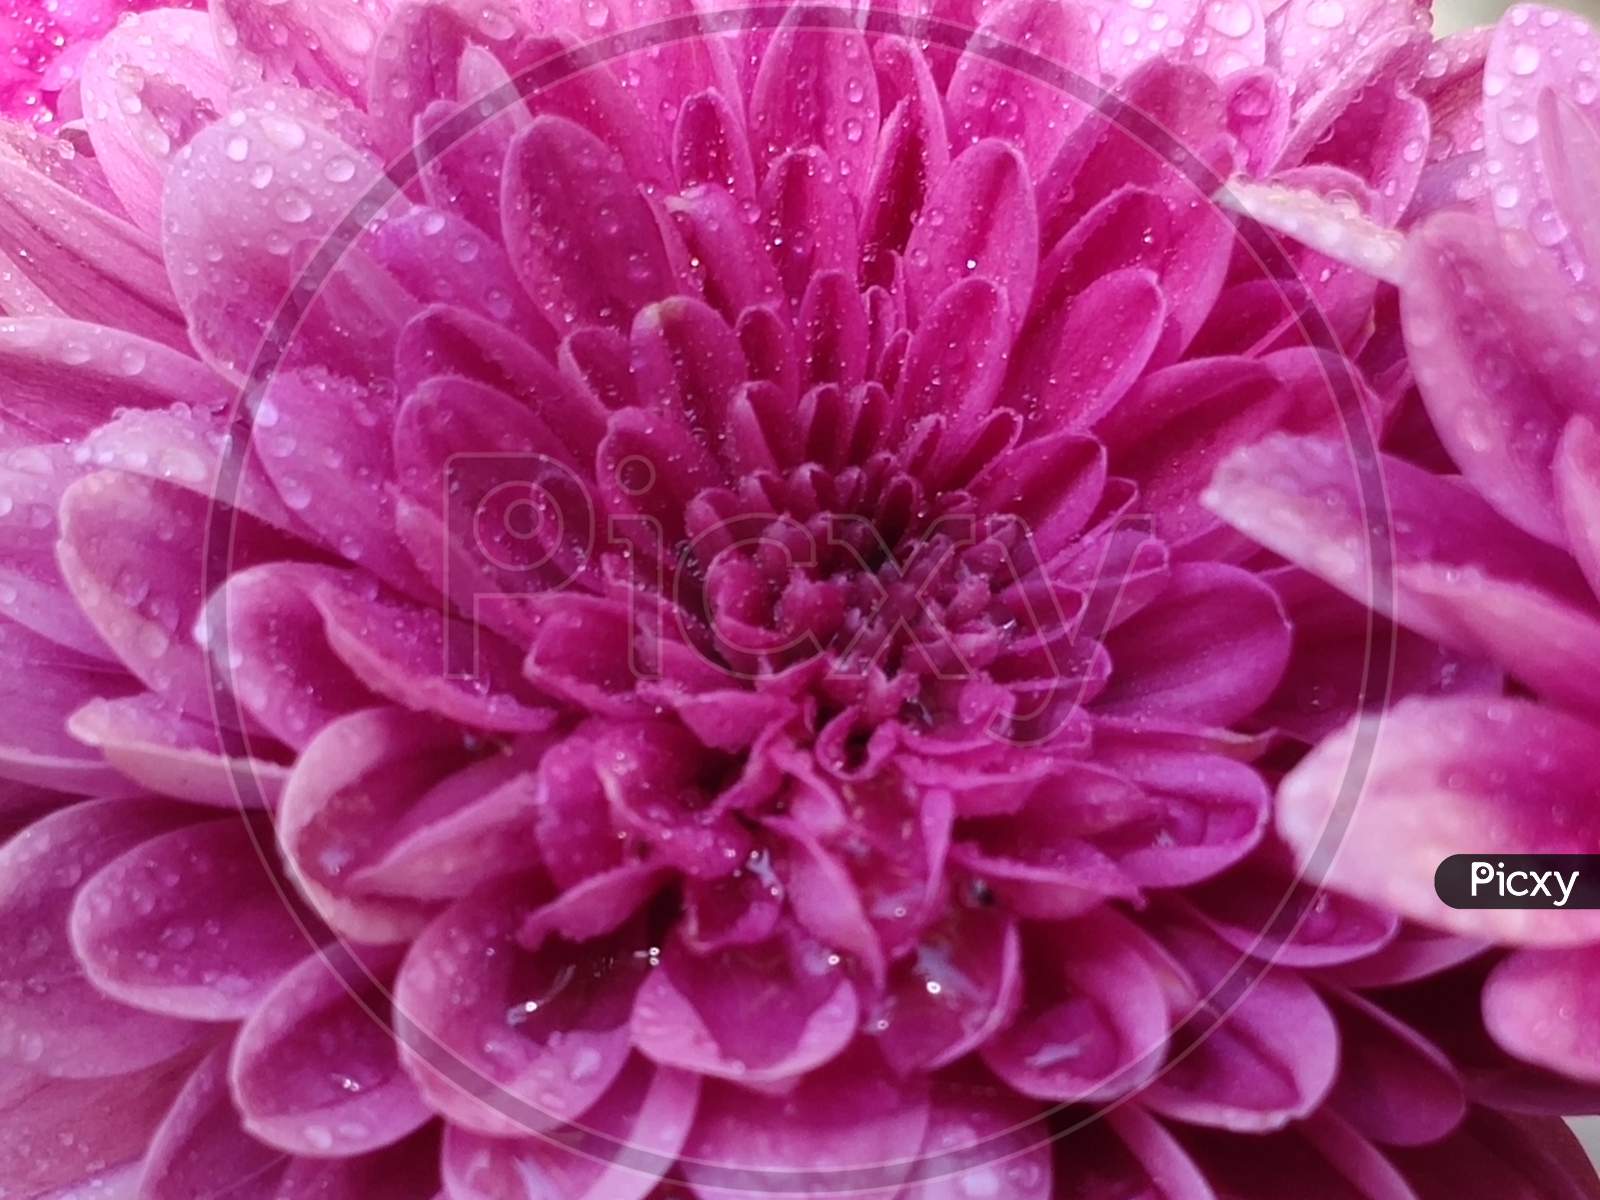 Pink chrysanthemem